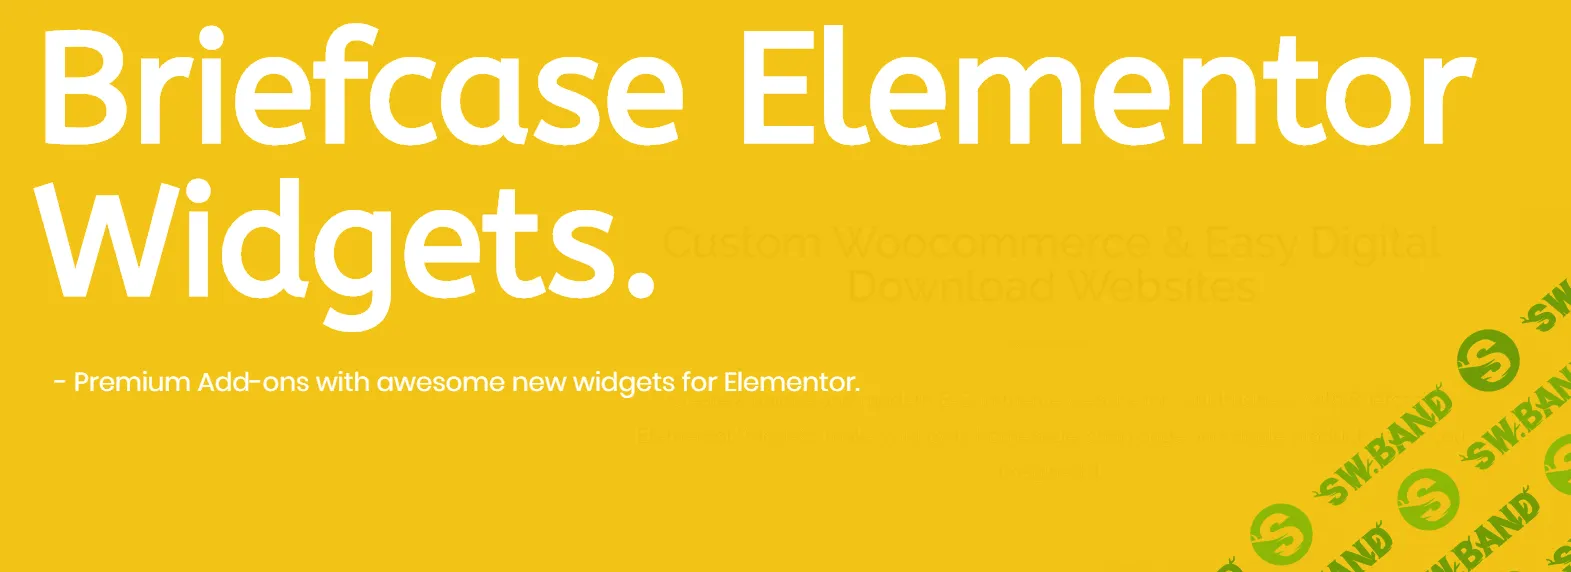 [briefcasewp.com] Briefcase Elementor Widgets v1.6.1 NULLED - премиум дополнения для Elementor +Extras